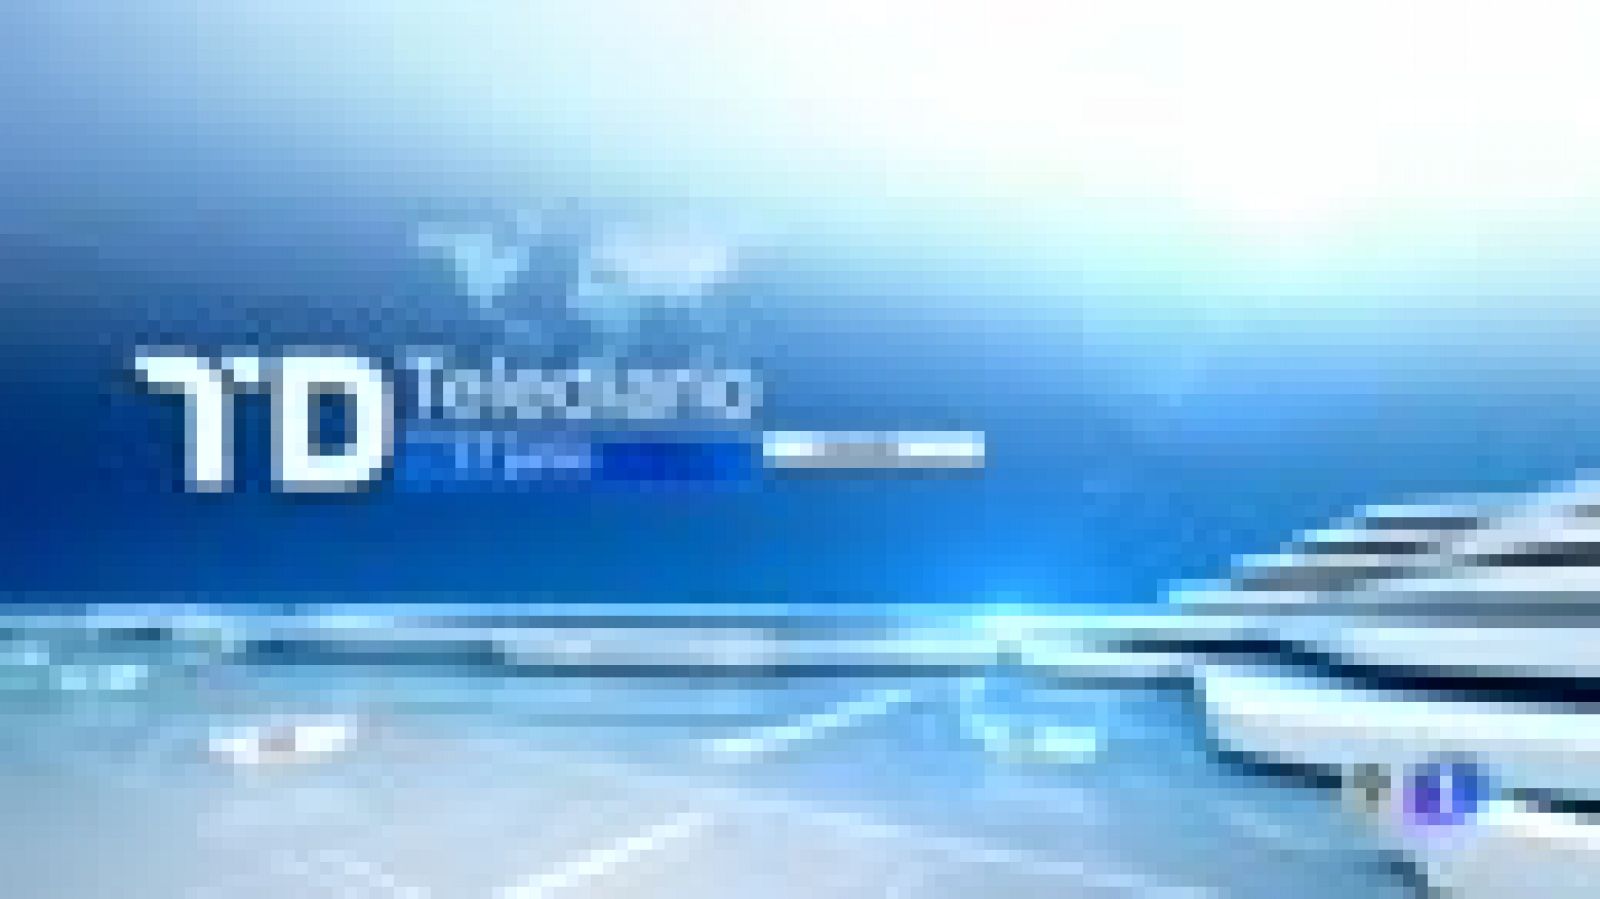 Telediario 1: Telediario Matinal en 4' 17/06/16 | RTVE Play